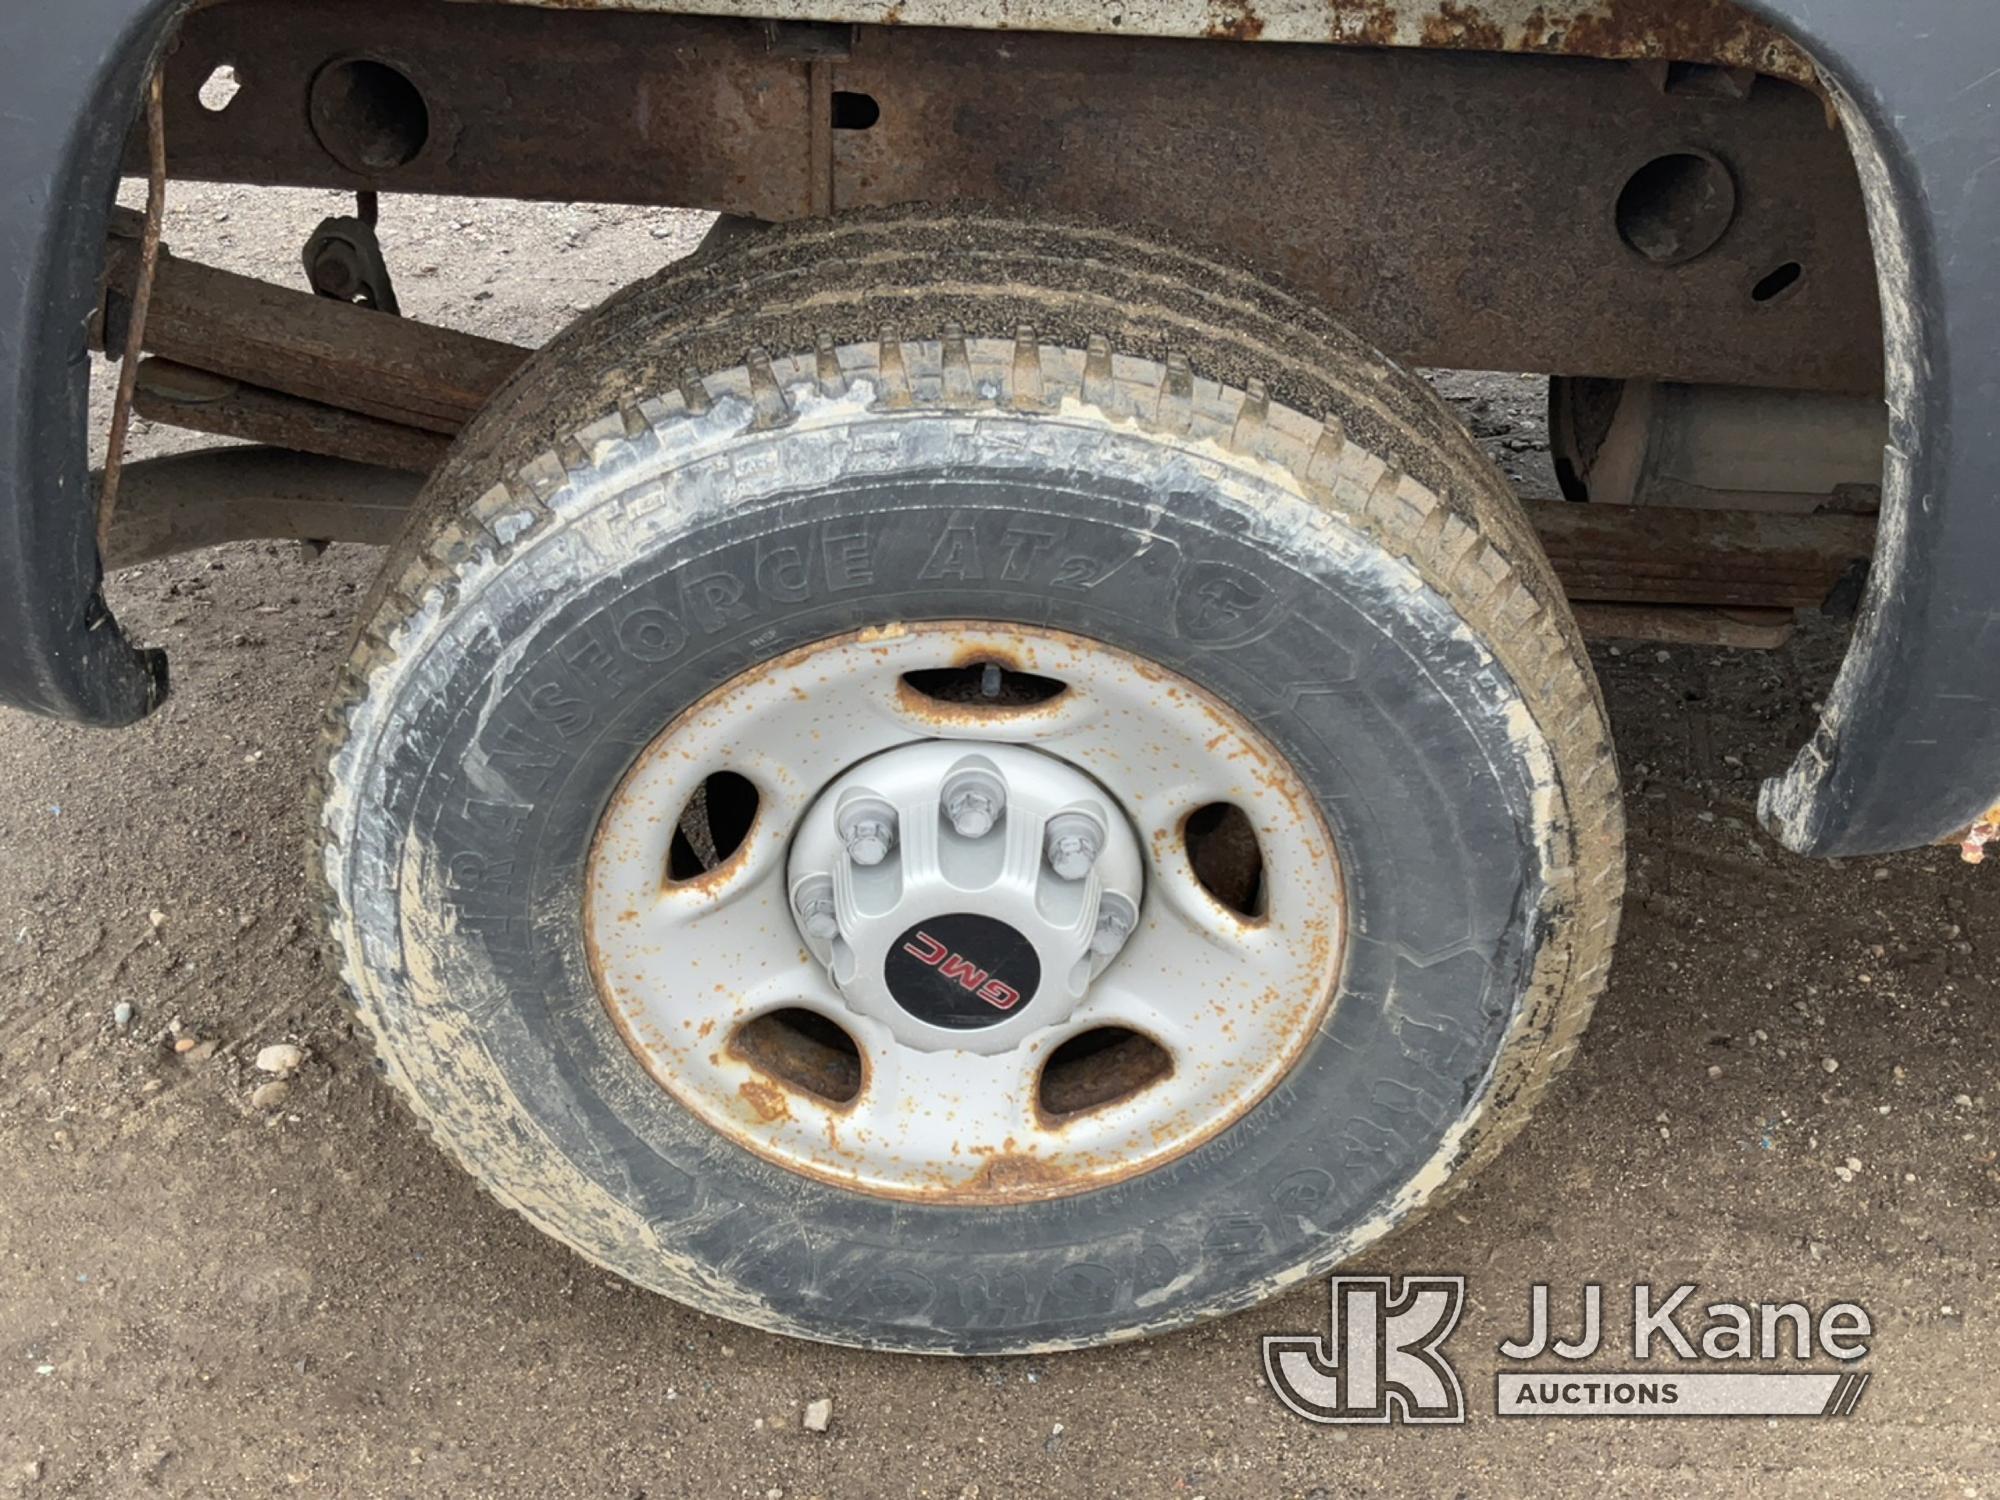 (Charlotte, MI) 2002 GMC Sierra 2500 Pickup Truck Runs & Moves) (Jump To Start, Rust Damage, Body Da